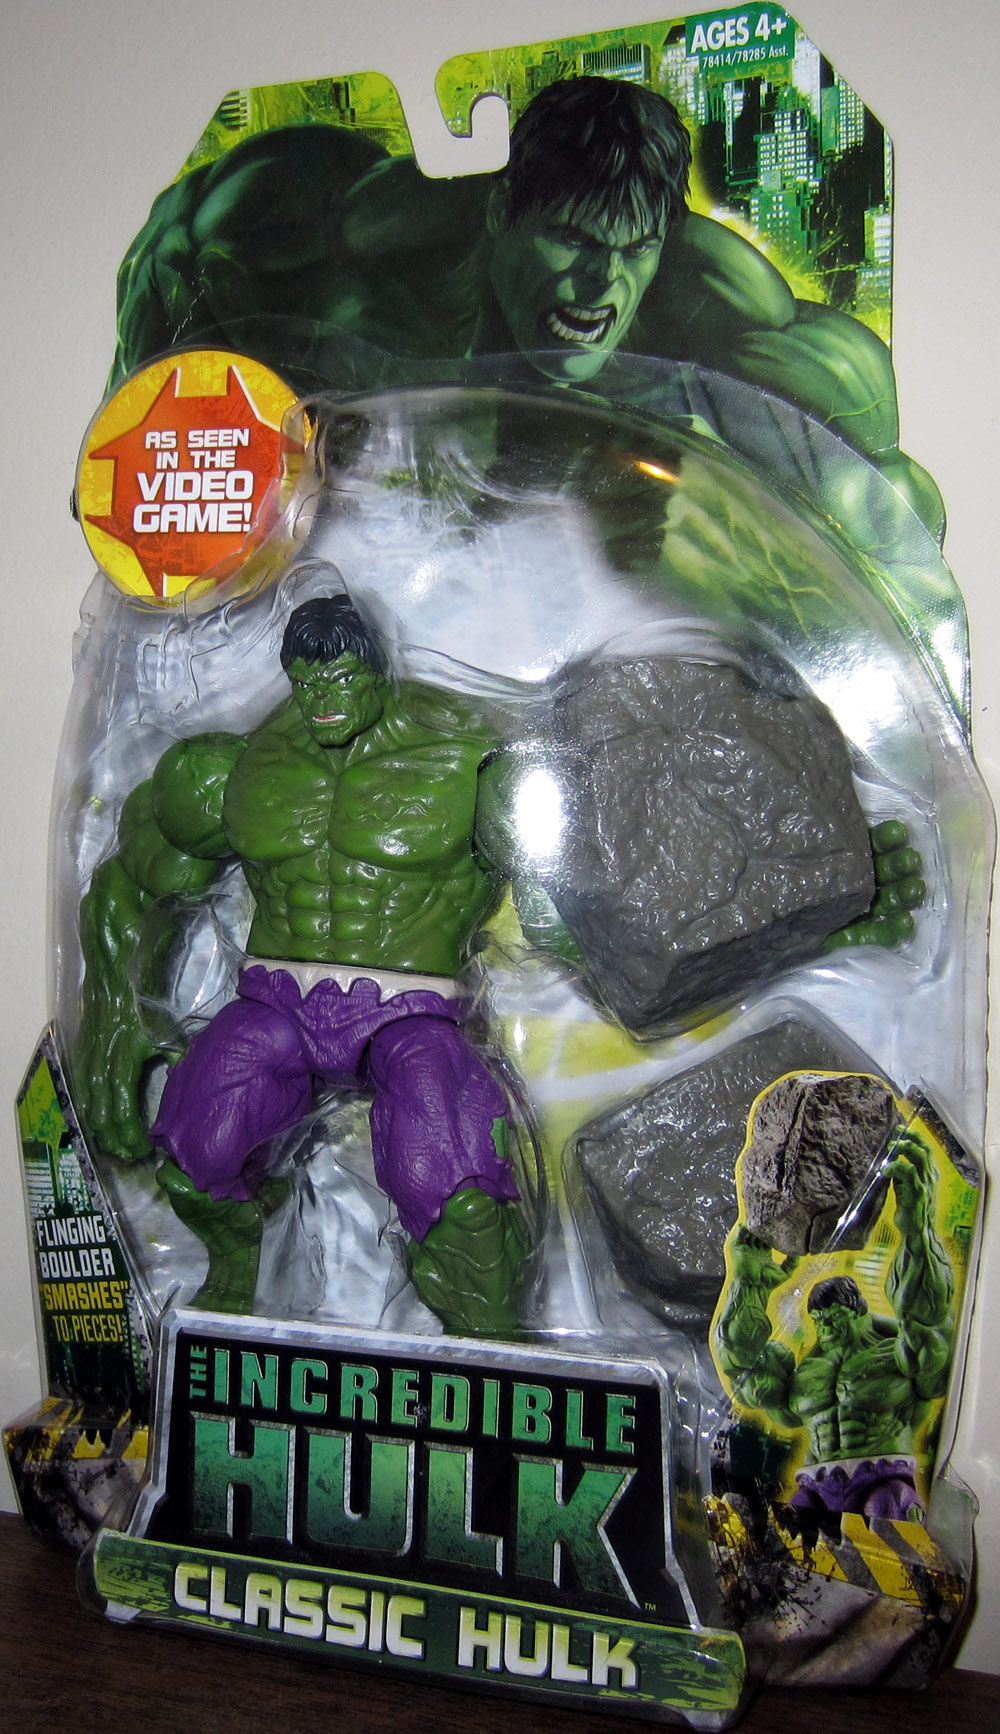 Do harpun kontakt Classic Hulk Figure Seen Video Game Flinging Boulder Smashes Pieces